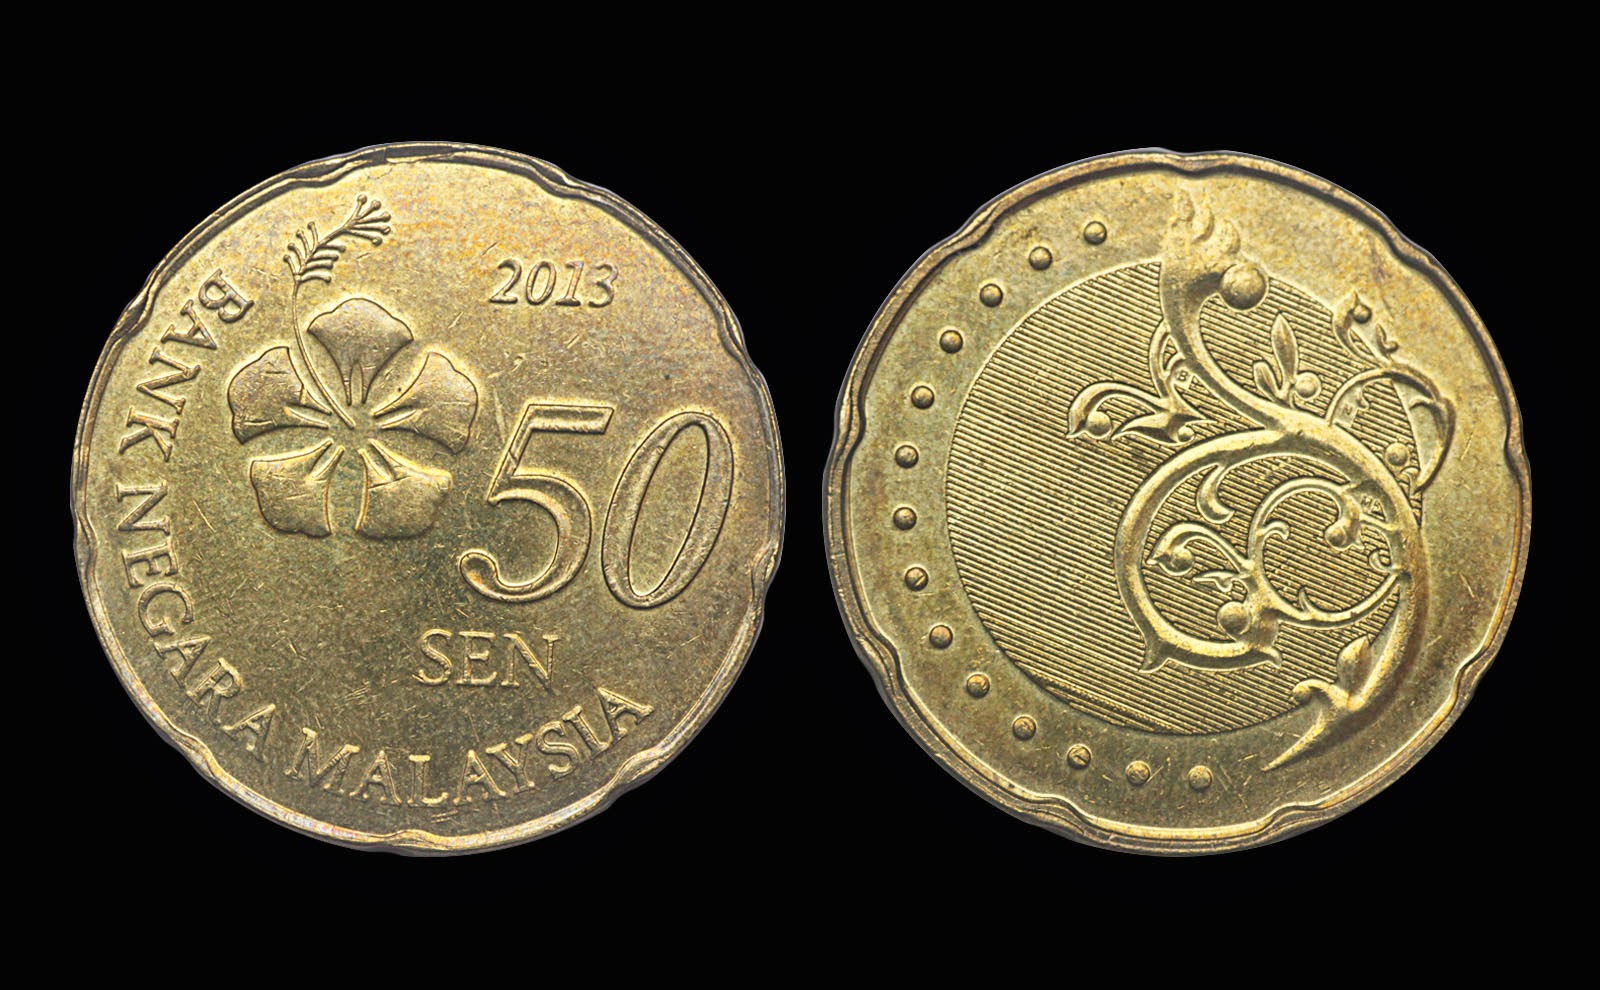 Koleksi duit syiling Malaysia (Malaya) - Unikversiti